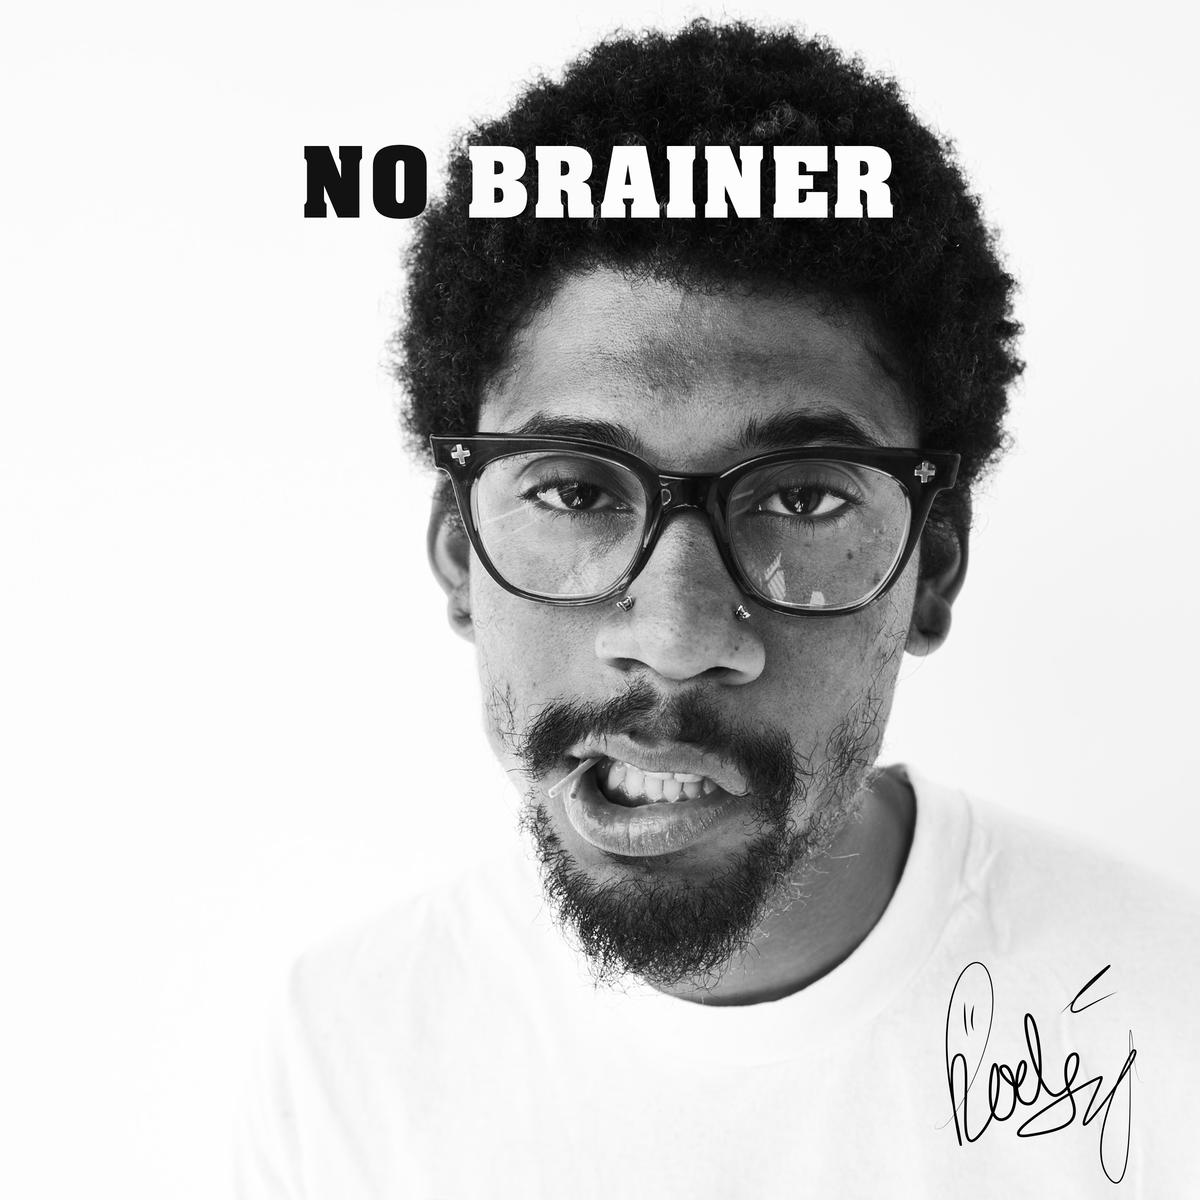 Hodgy unveils new track “No Brainer”